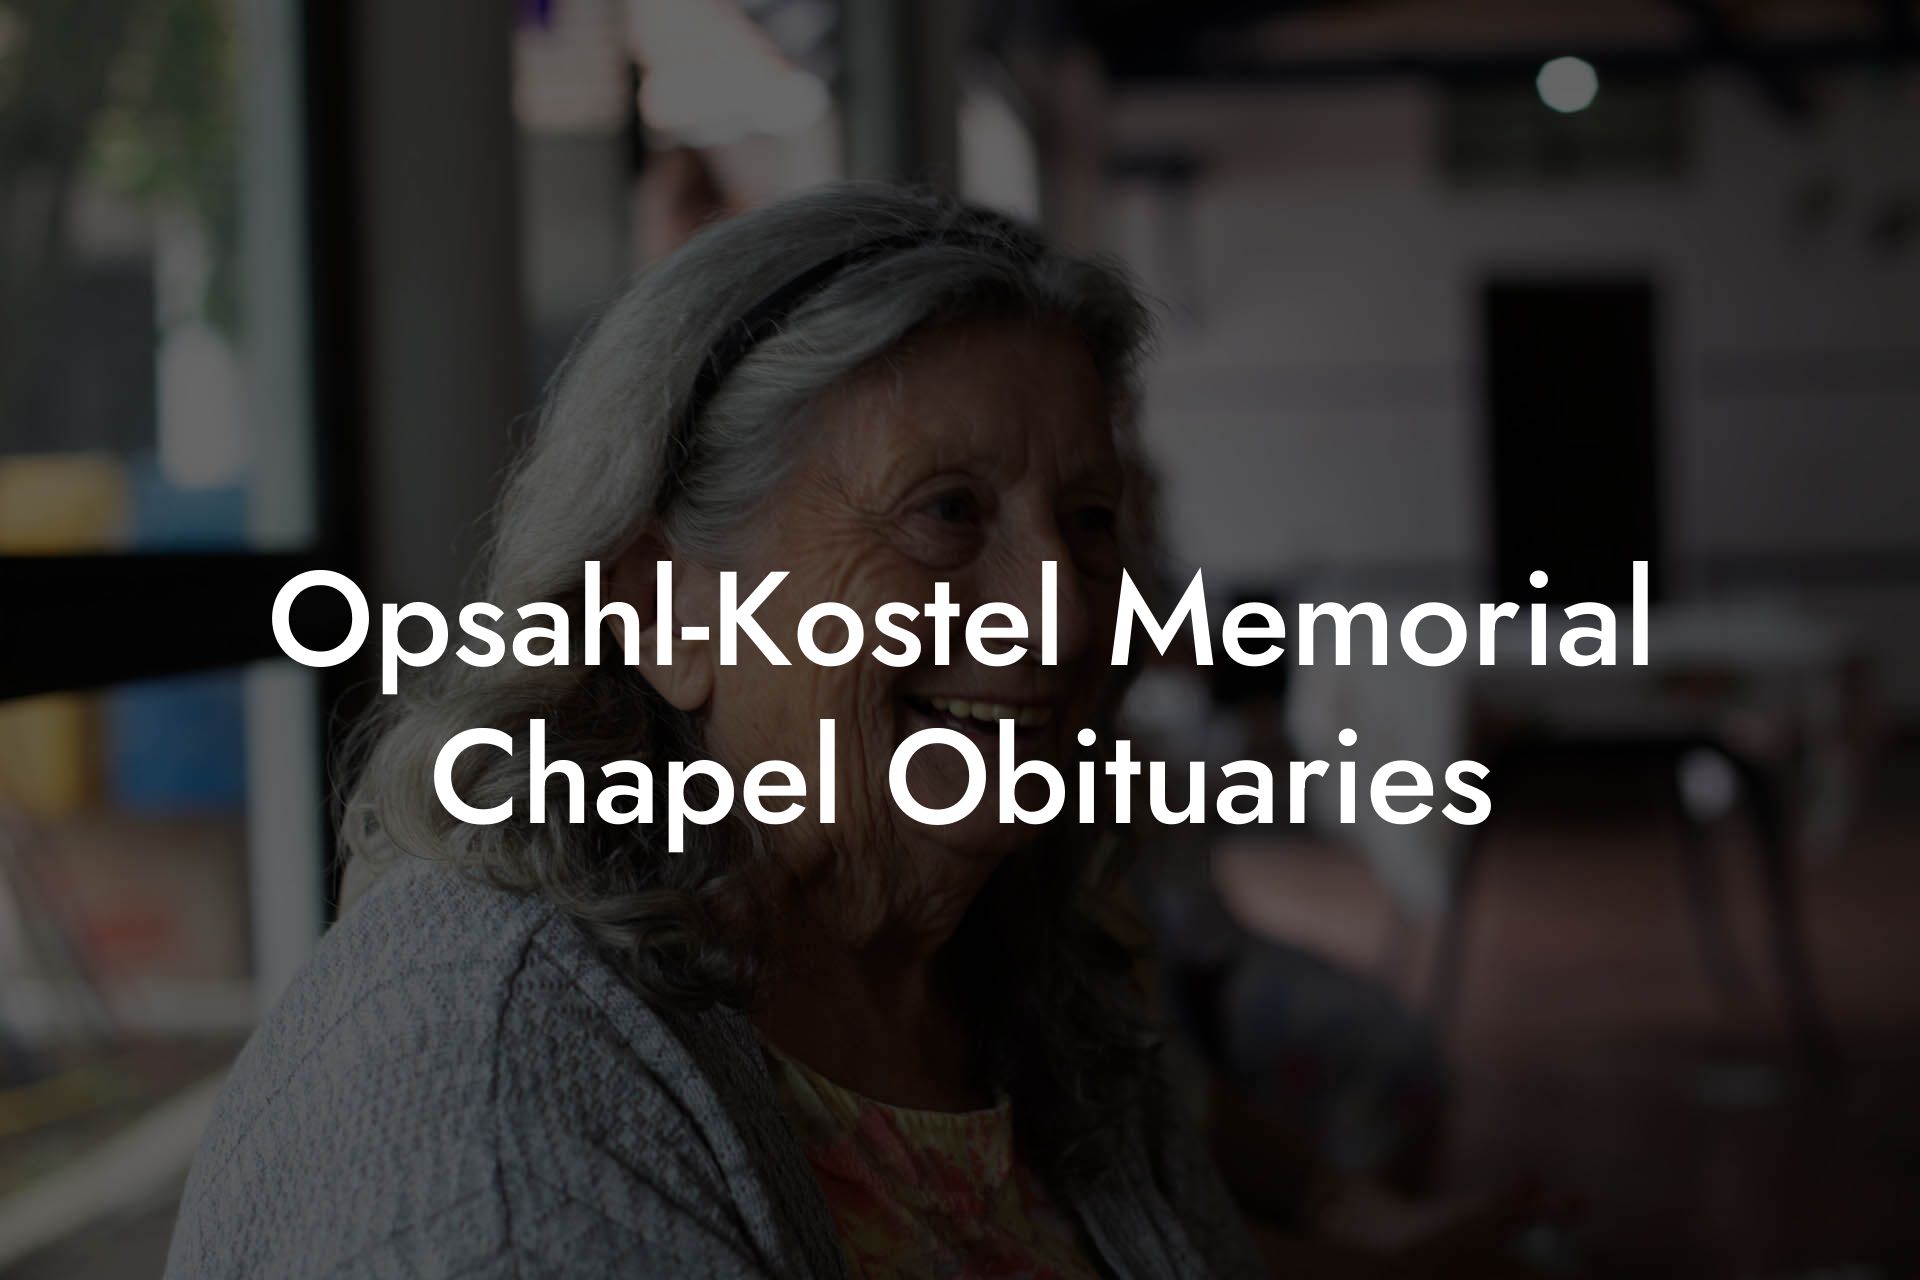 Opsahl-Kostel Memorial Chapel Obituaries